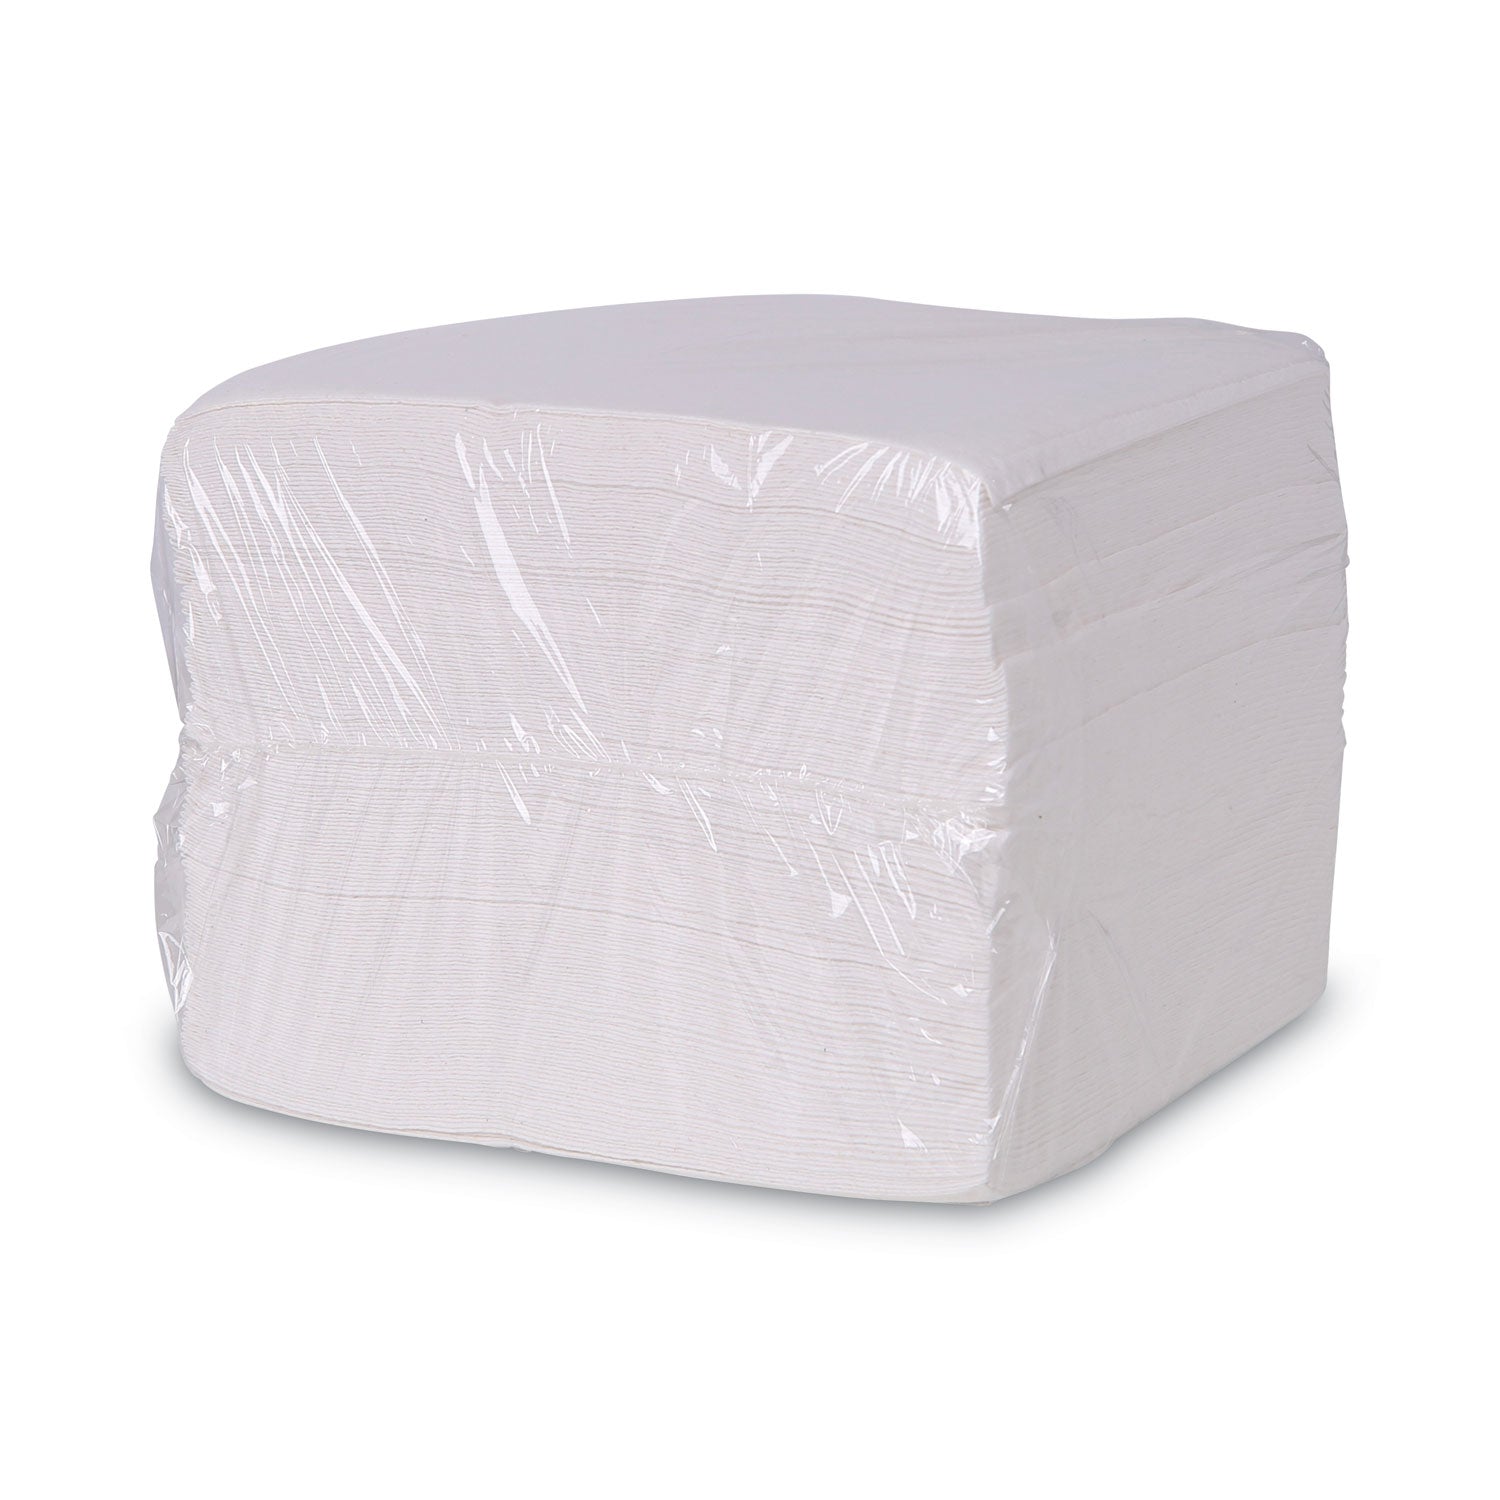 DRC Wipers, 12 x 13, White, 90 Bag, 12 Bags/Carton - 